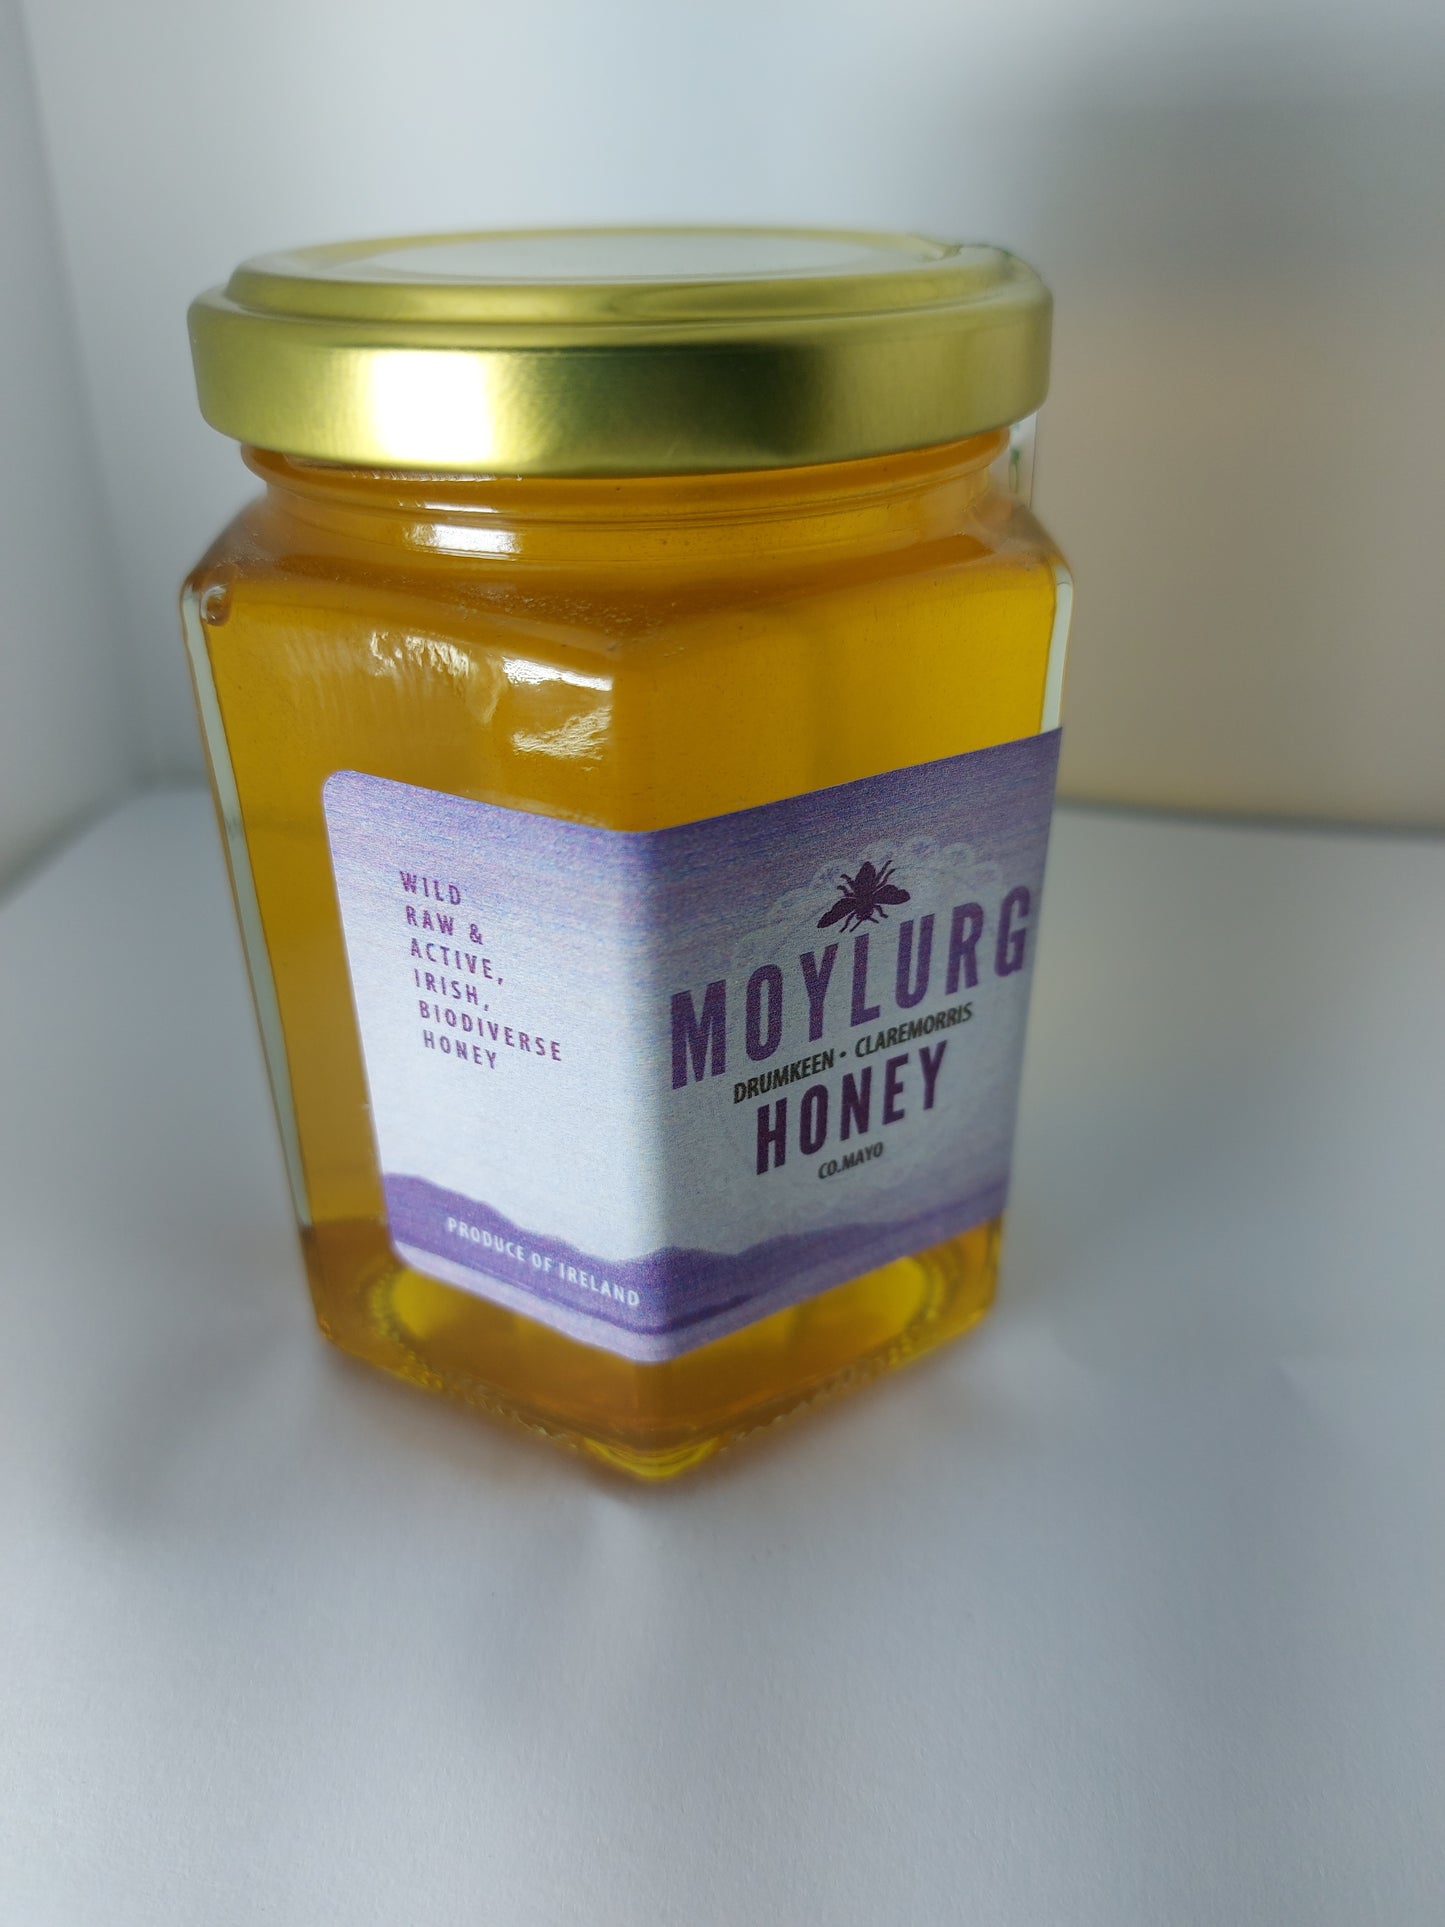 Claremorris Wild Raw Active Honey